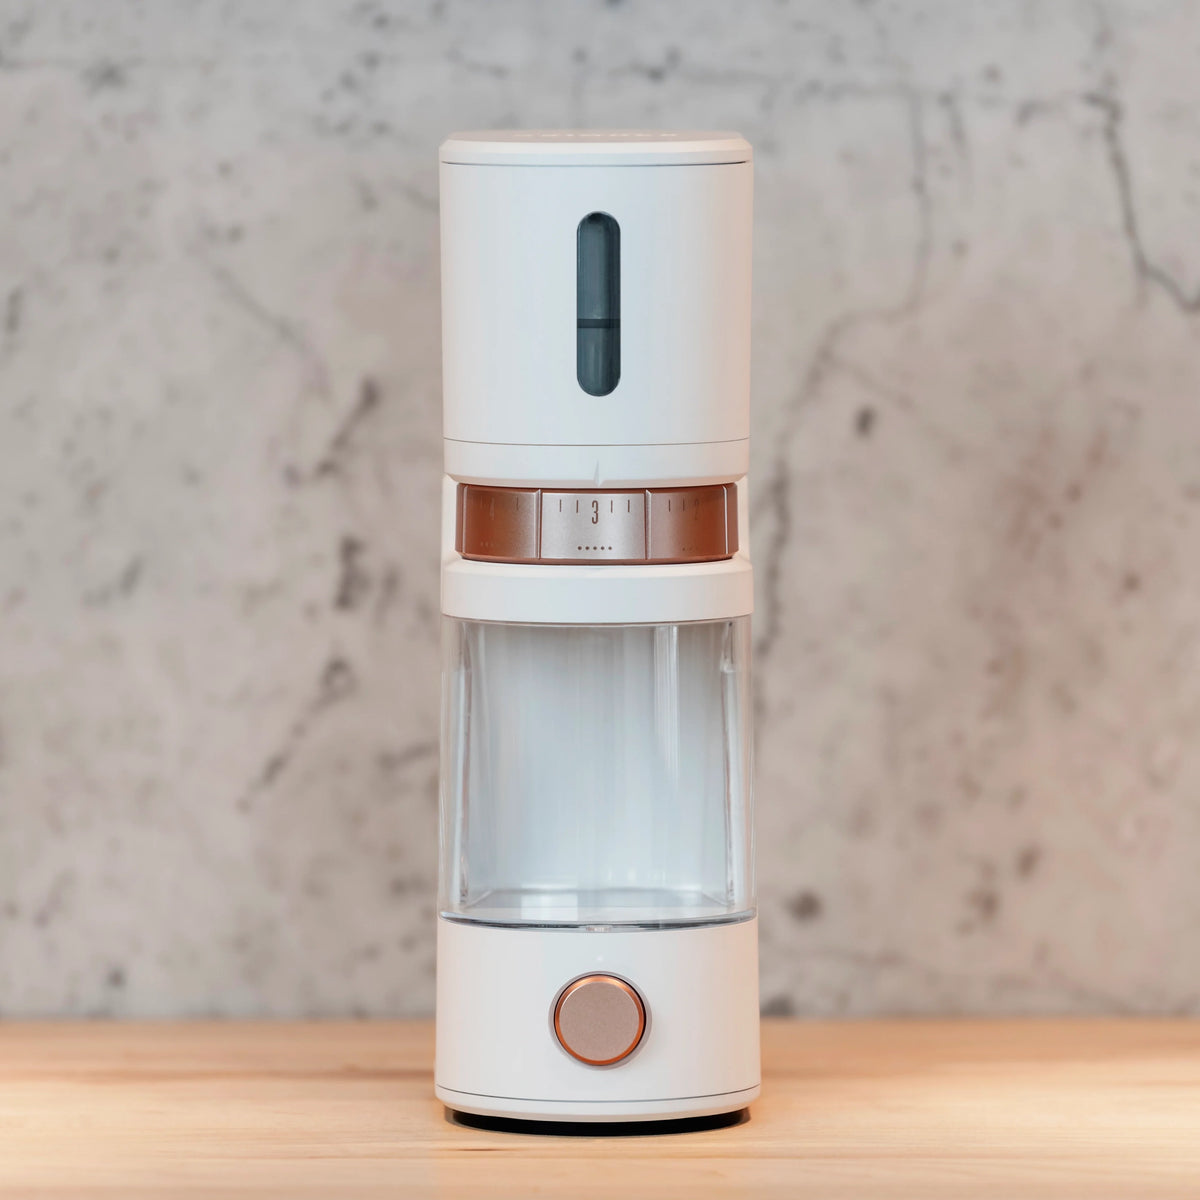 Copper coffee grinder